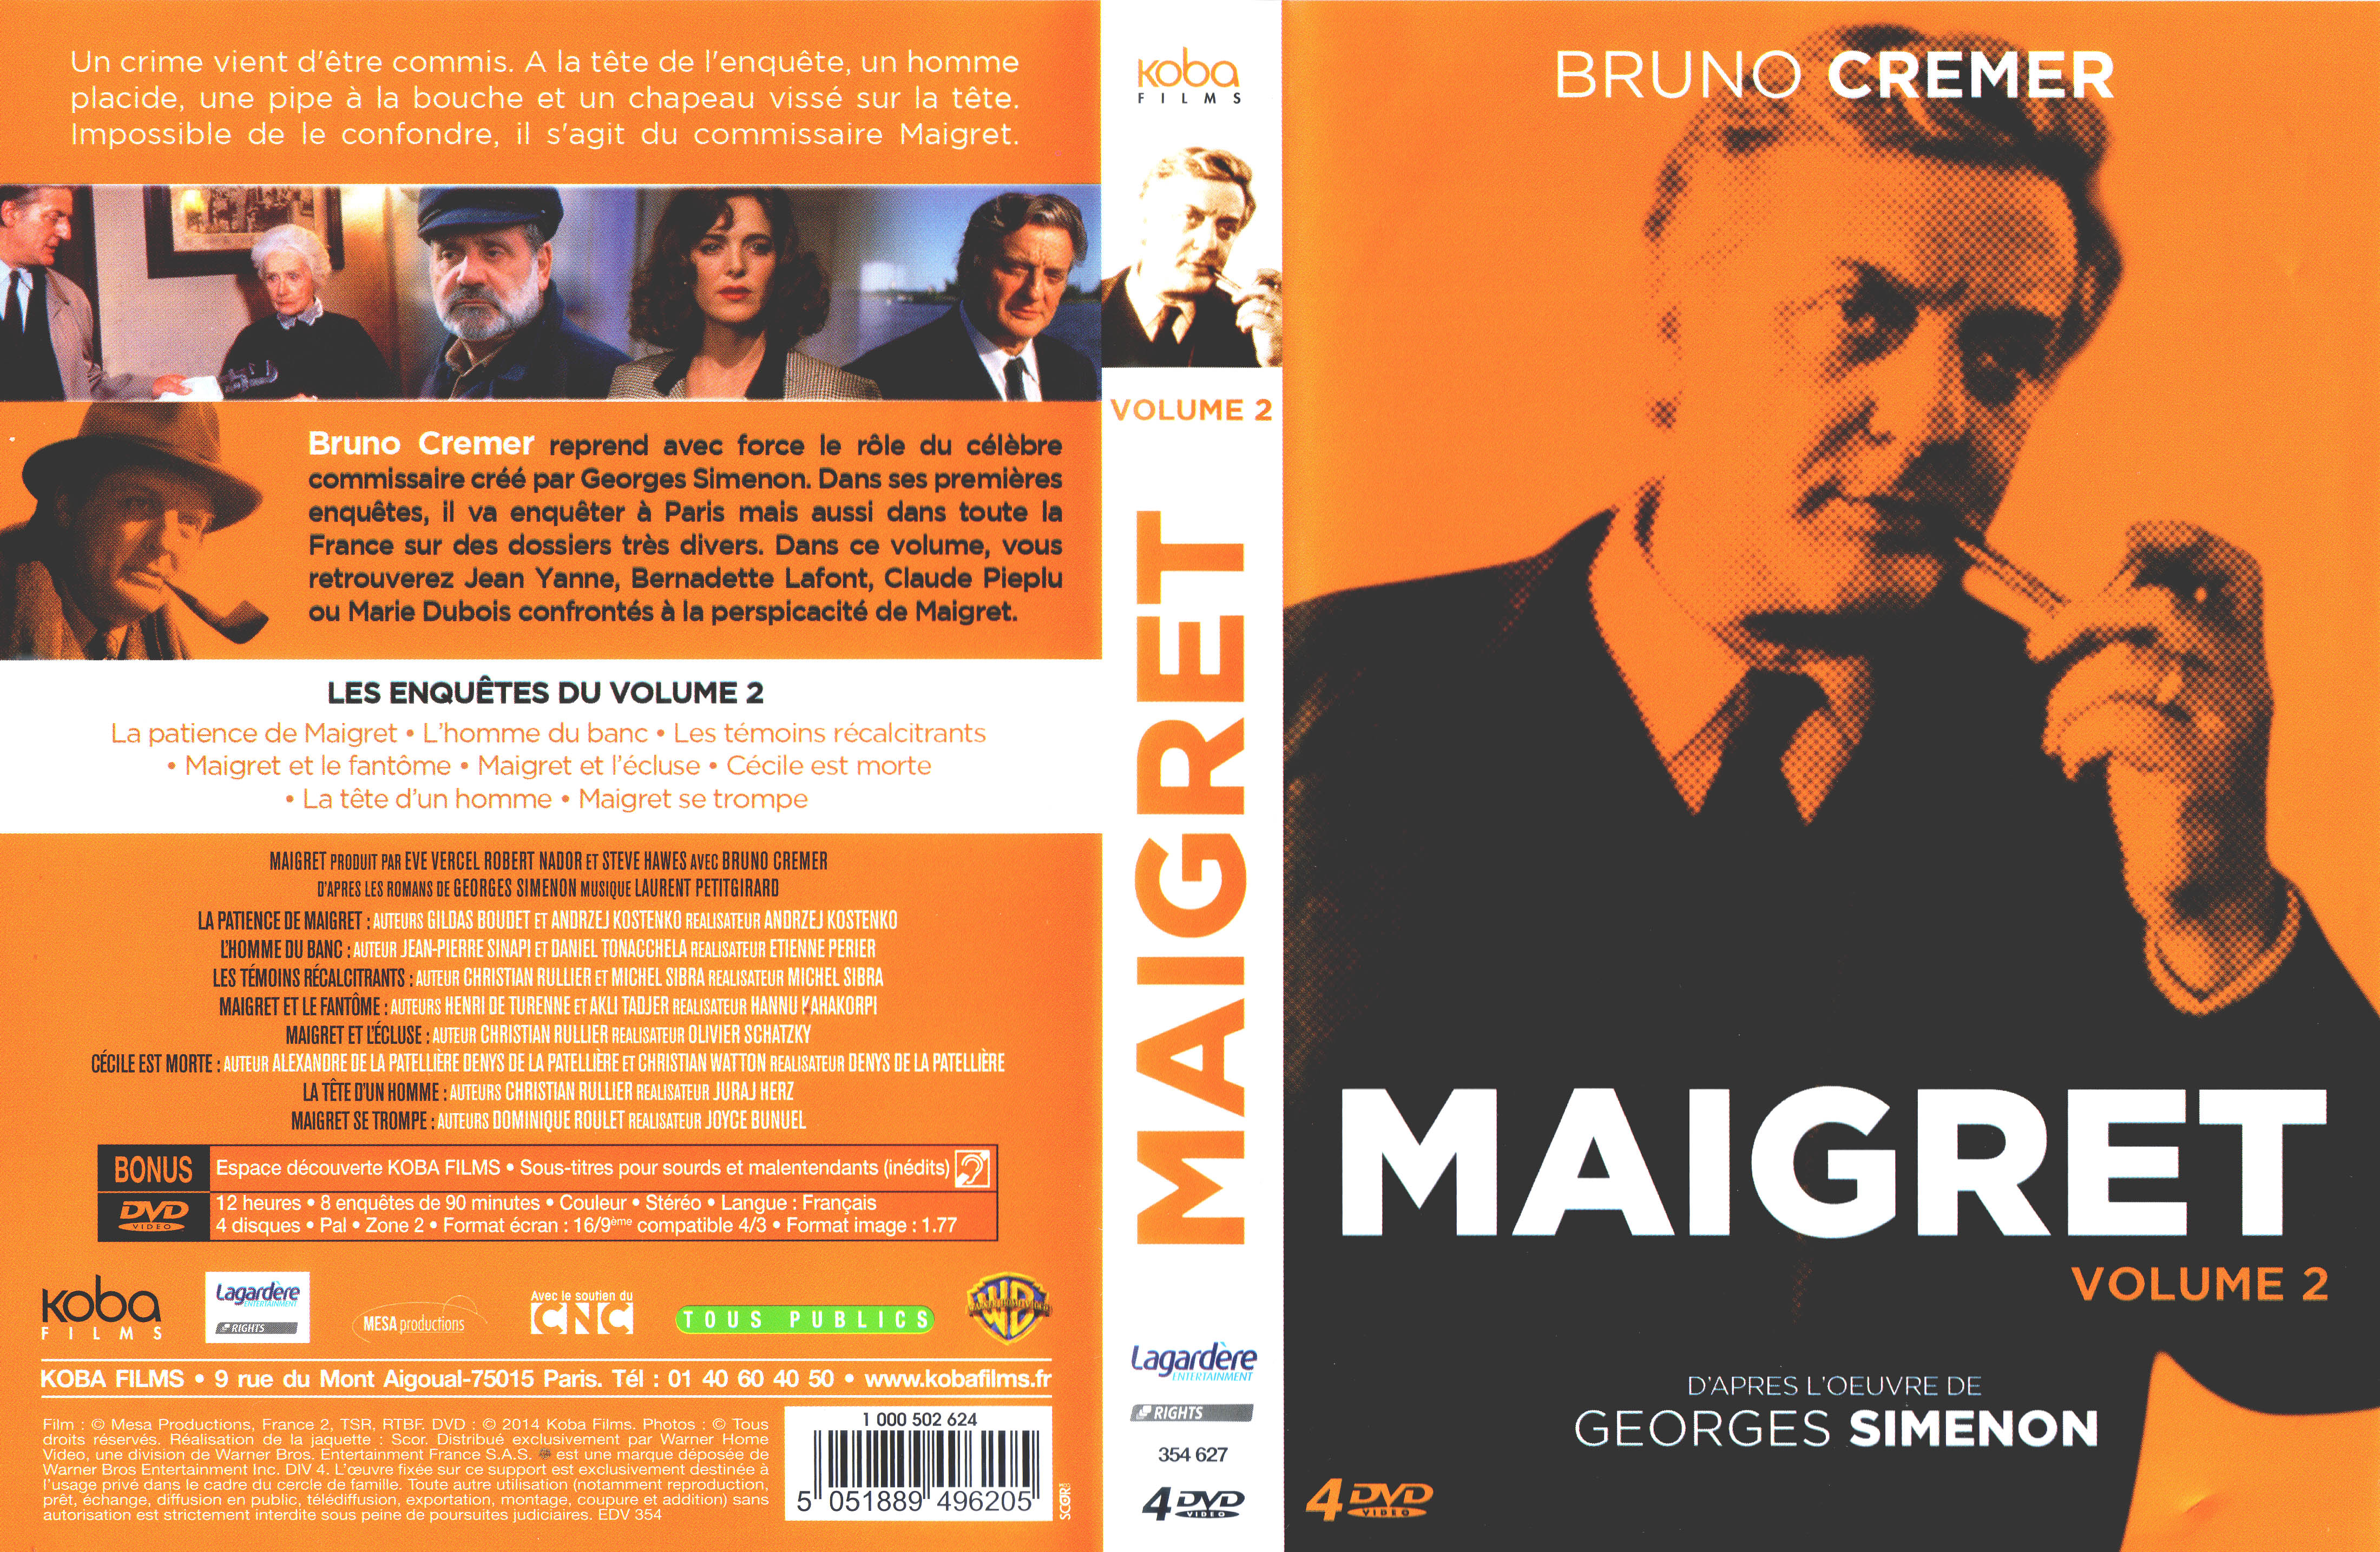 Jaquette DVD Maigret Volume 2 (Bruno Cremer)